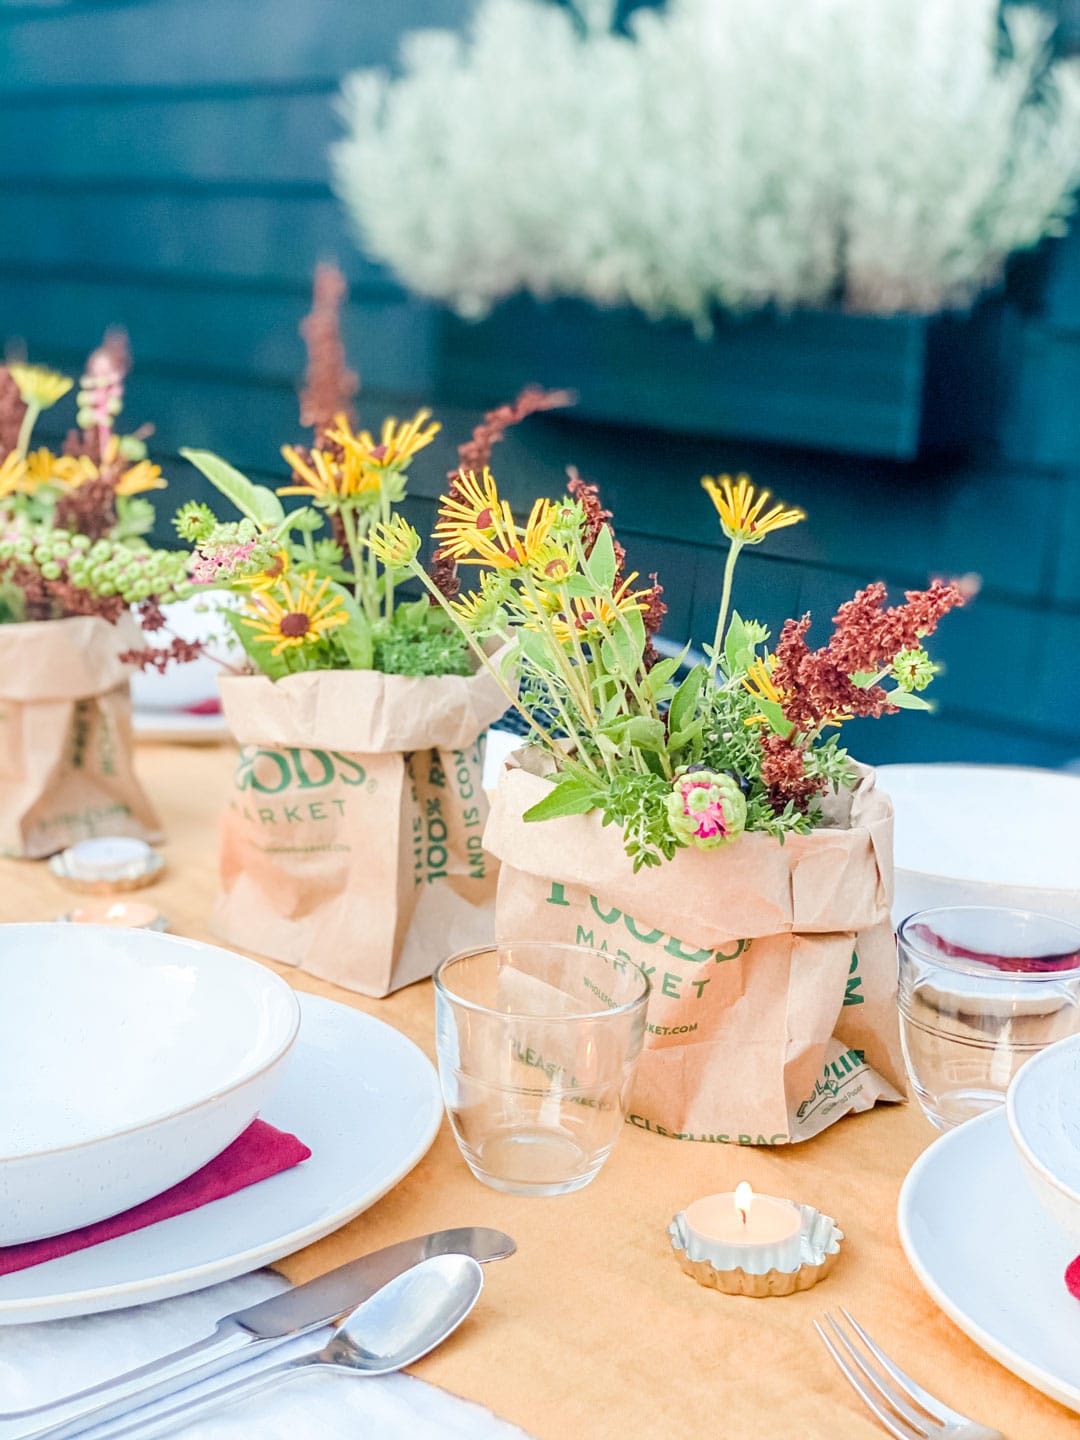 Lifestyle blogger Annie Diamond shares her simple diy flower bouquets